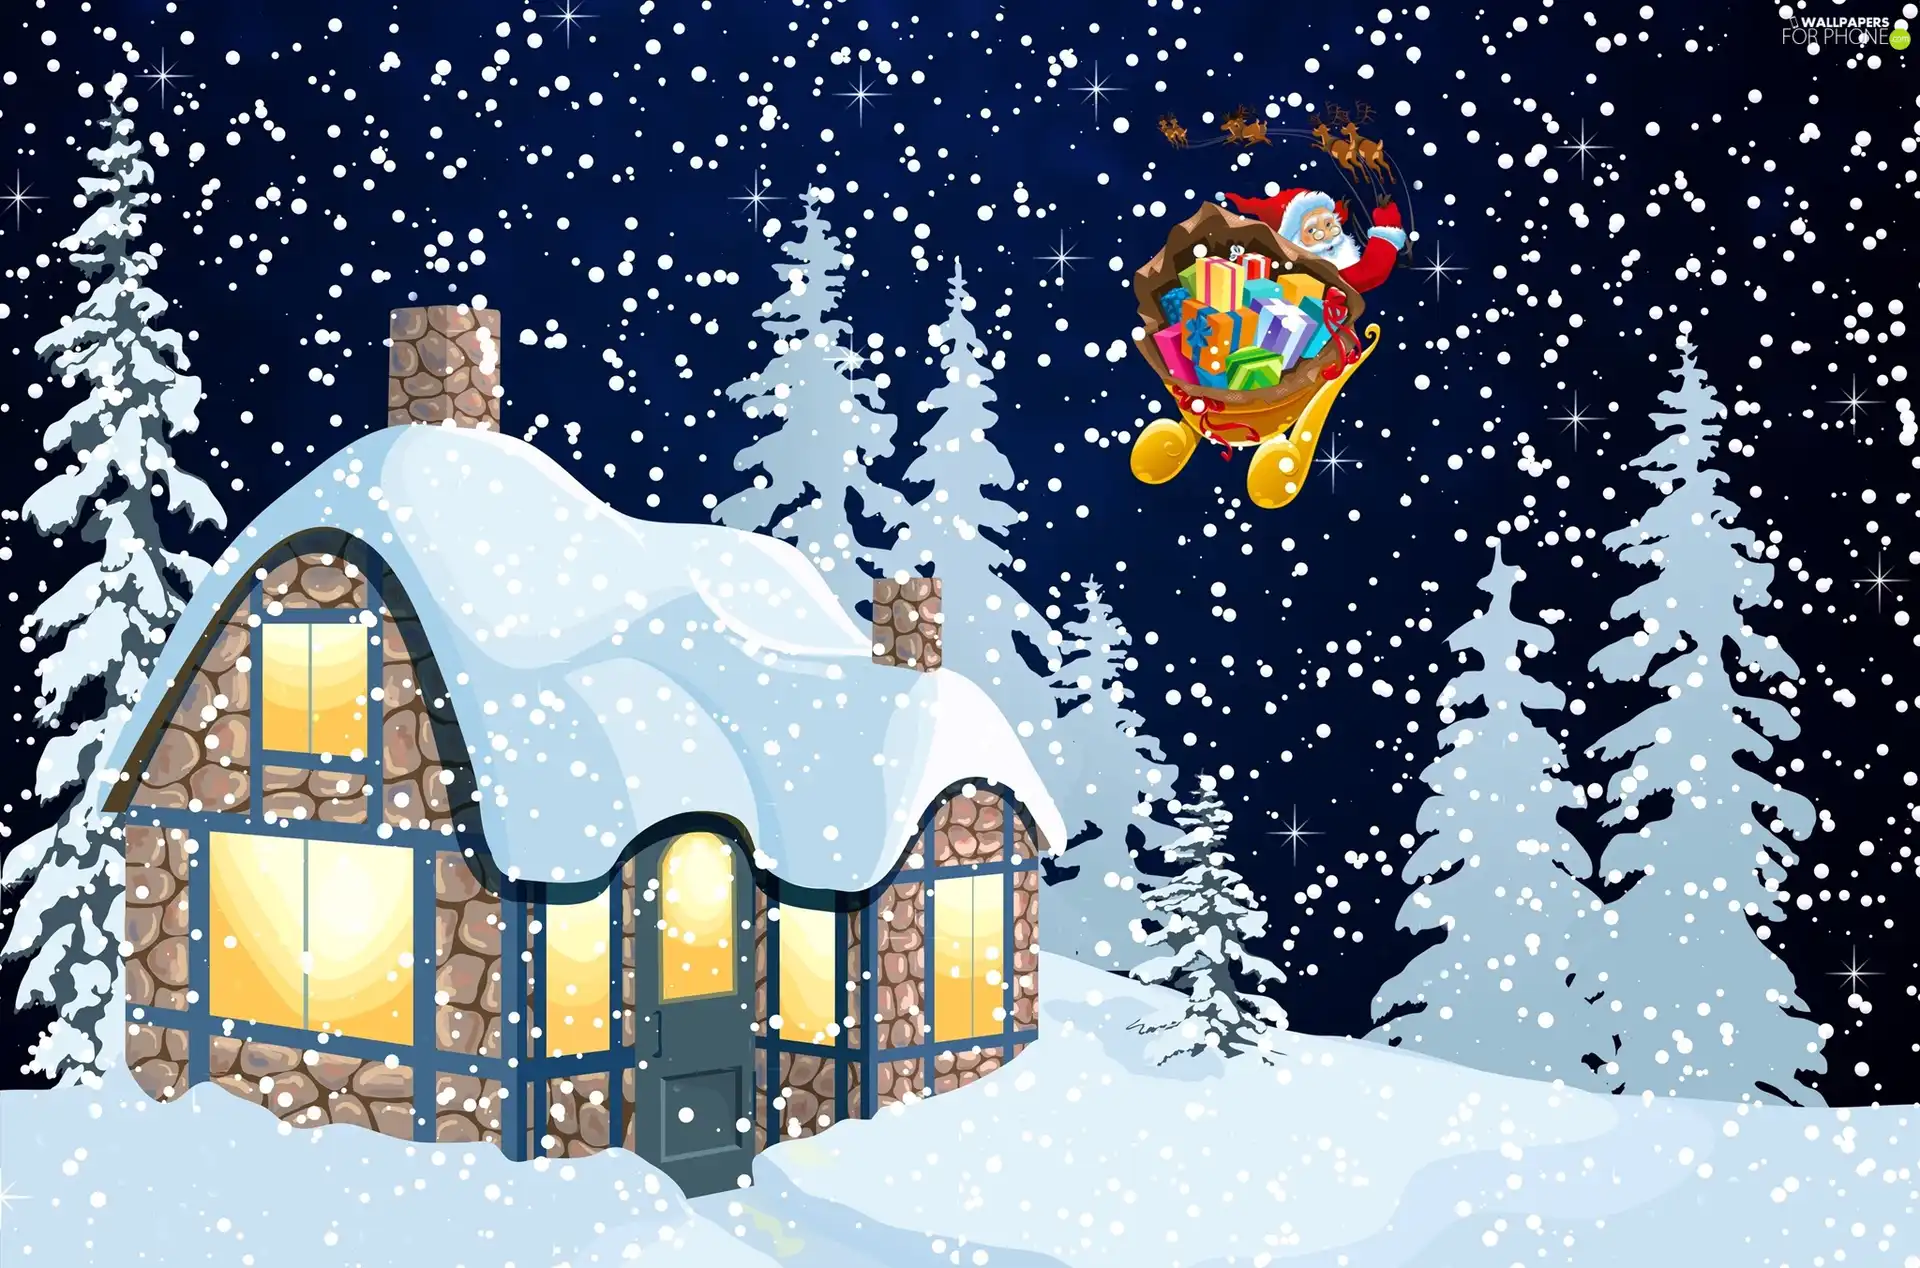 sleigh, Santa, winter, reindeer, viewes, Home, 2D Graphics, trees